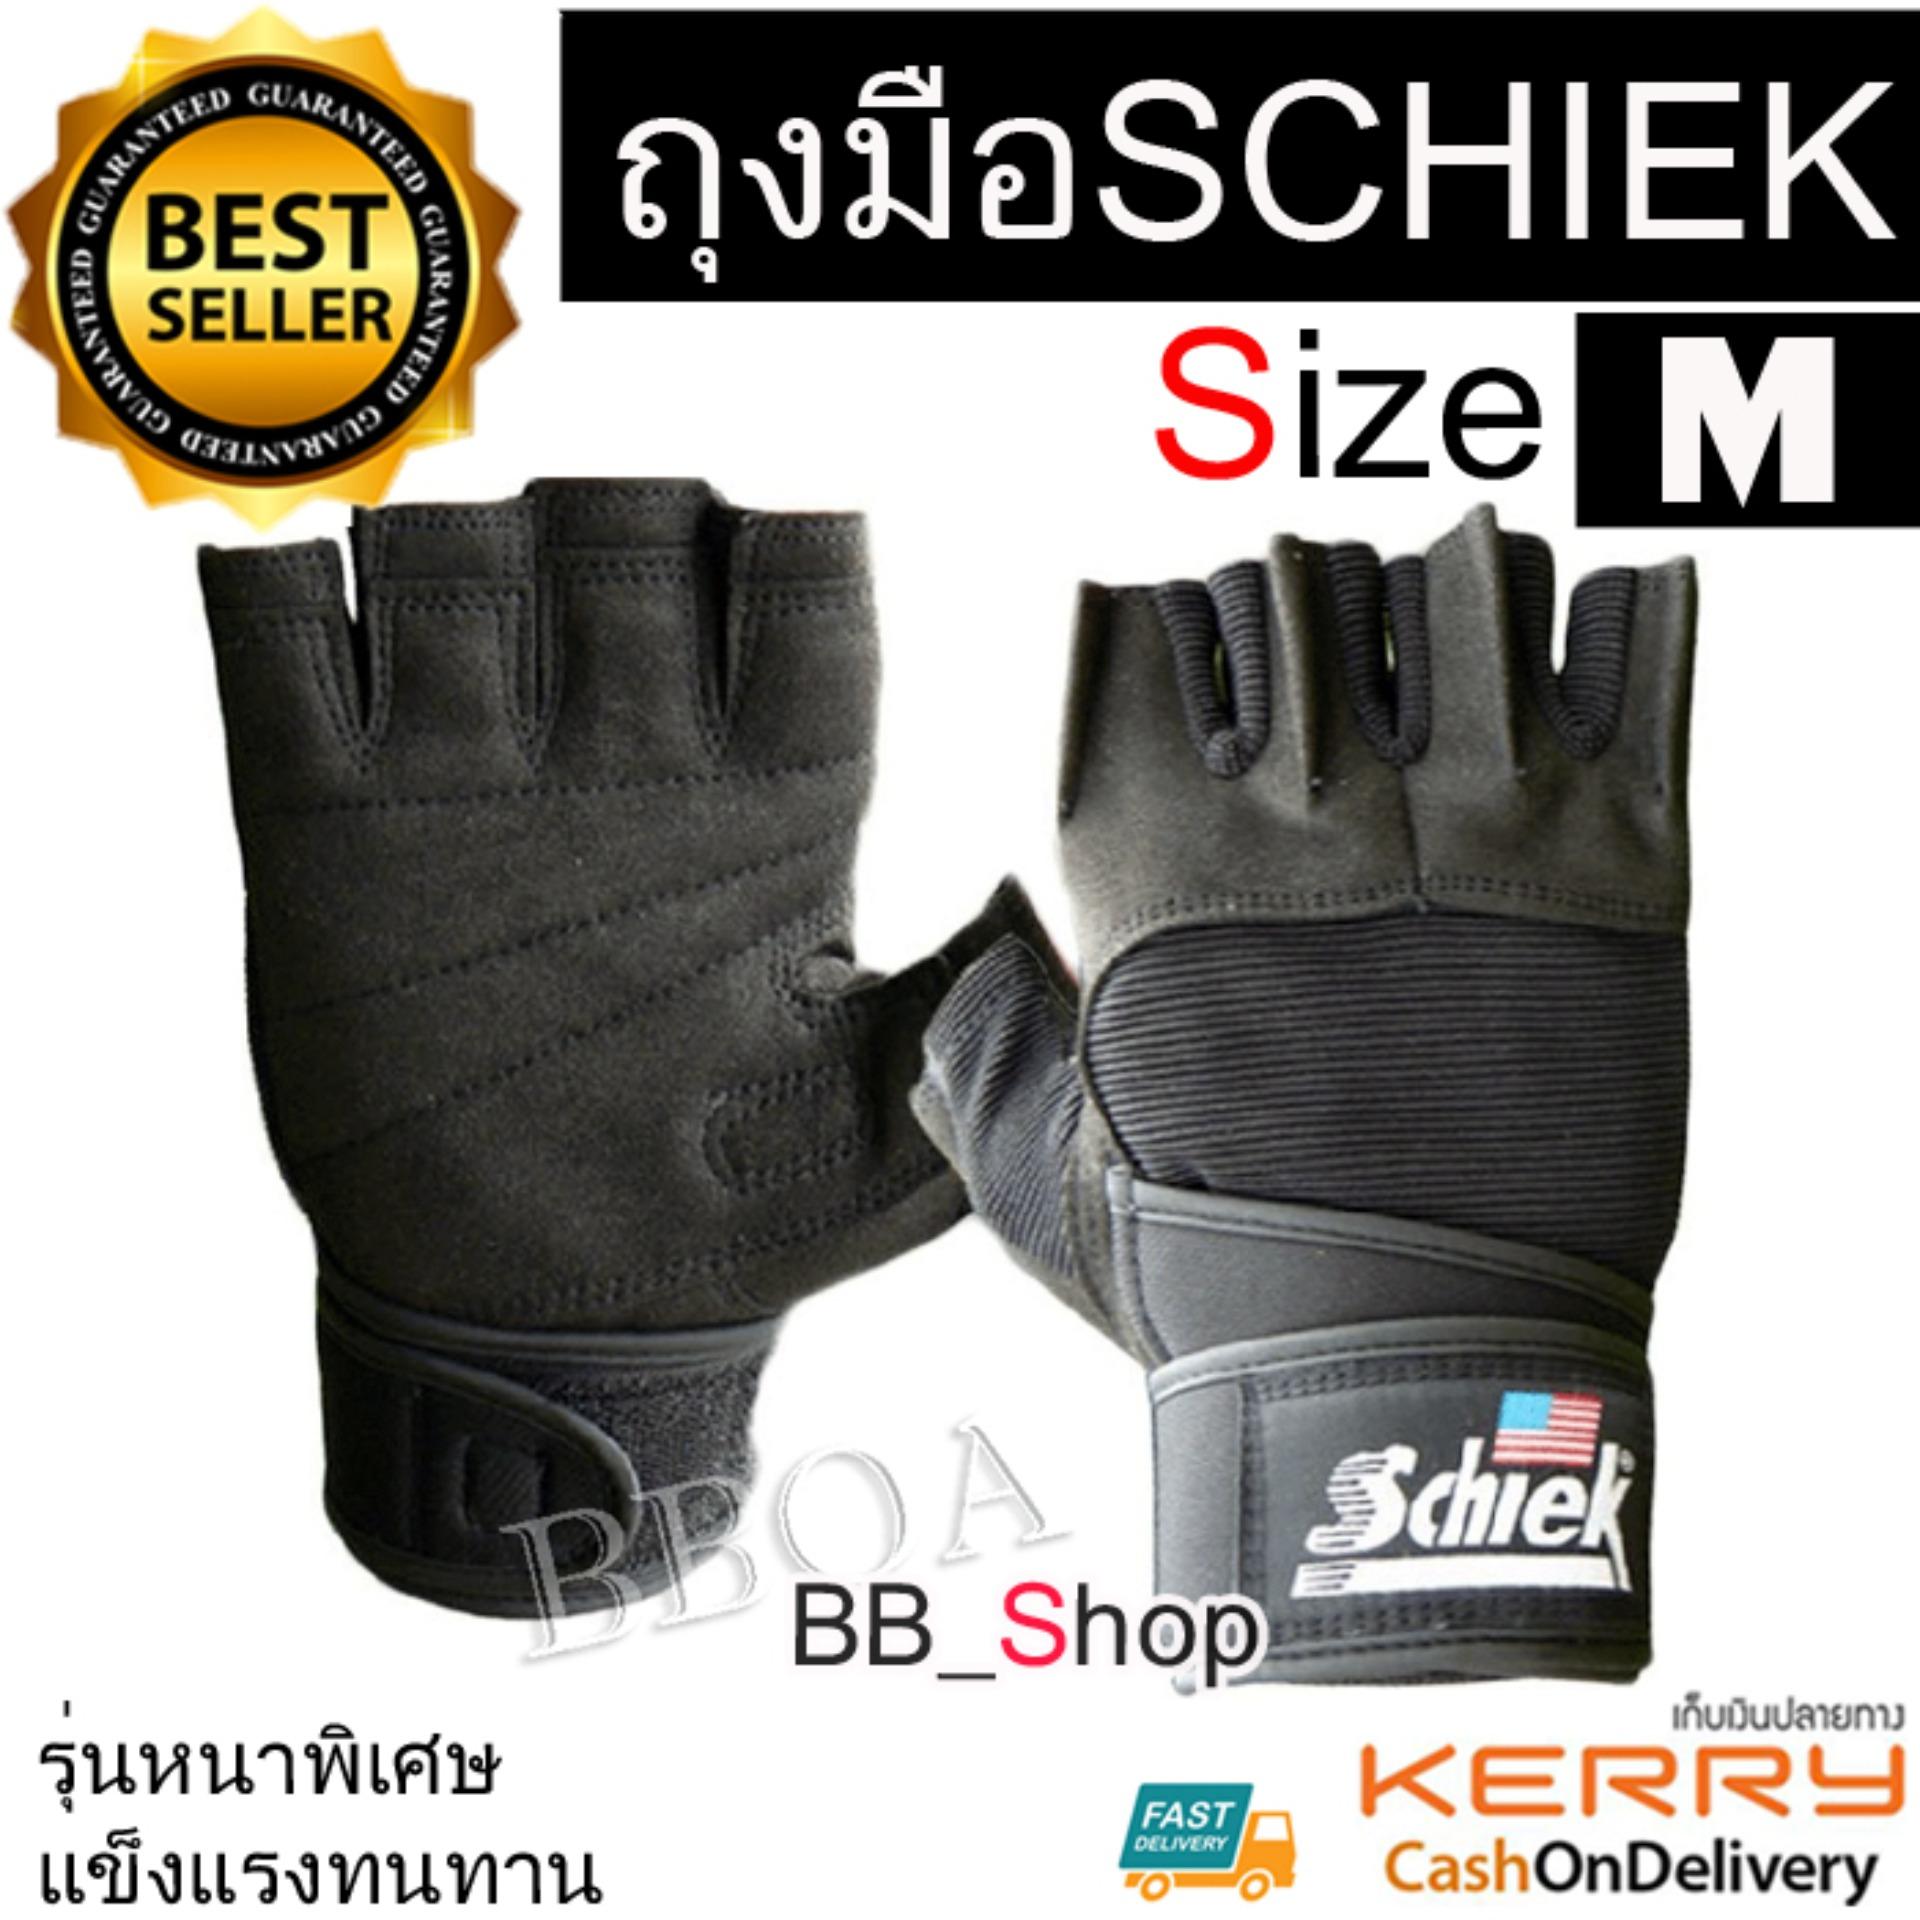 Schiek ถุงมือ ยกน้ำหนัก ถุงมือฟิตเนส Fitness Glove size M รุ่นหนา